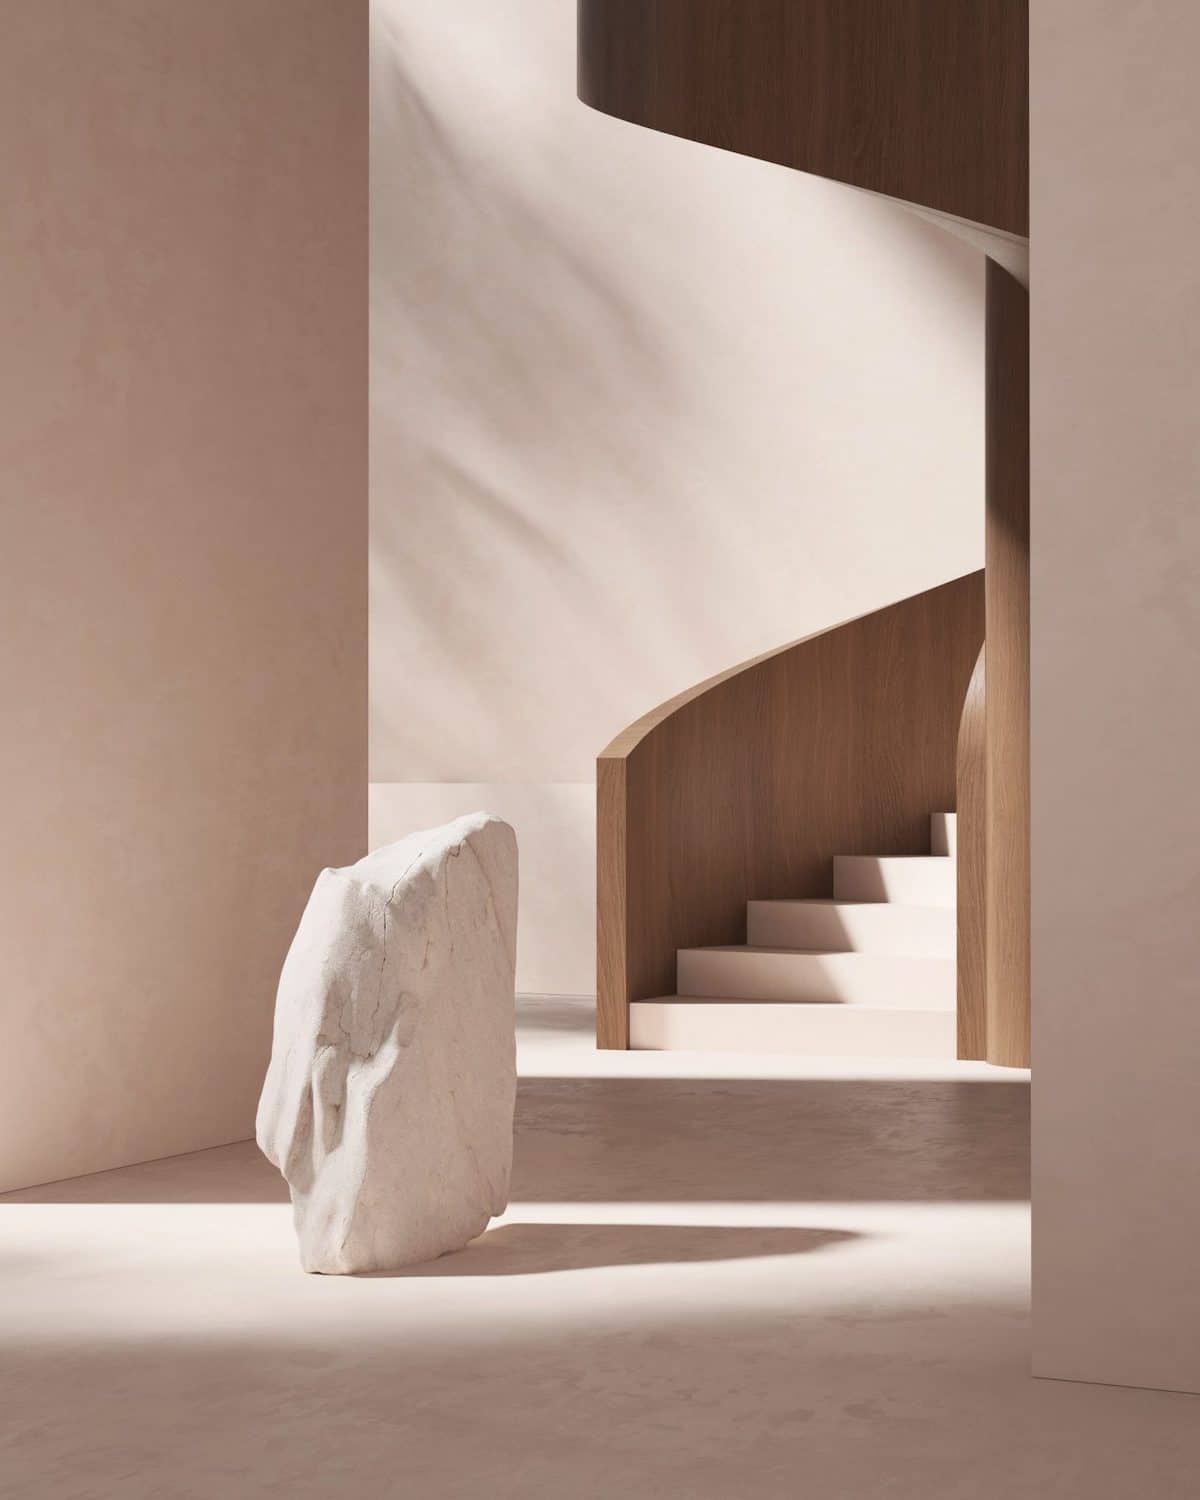 Rock and Stair in Interior Rendering by Sébastien Baert